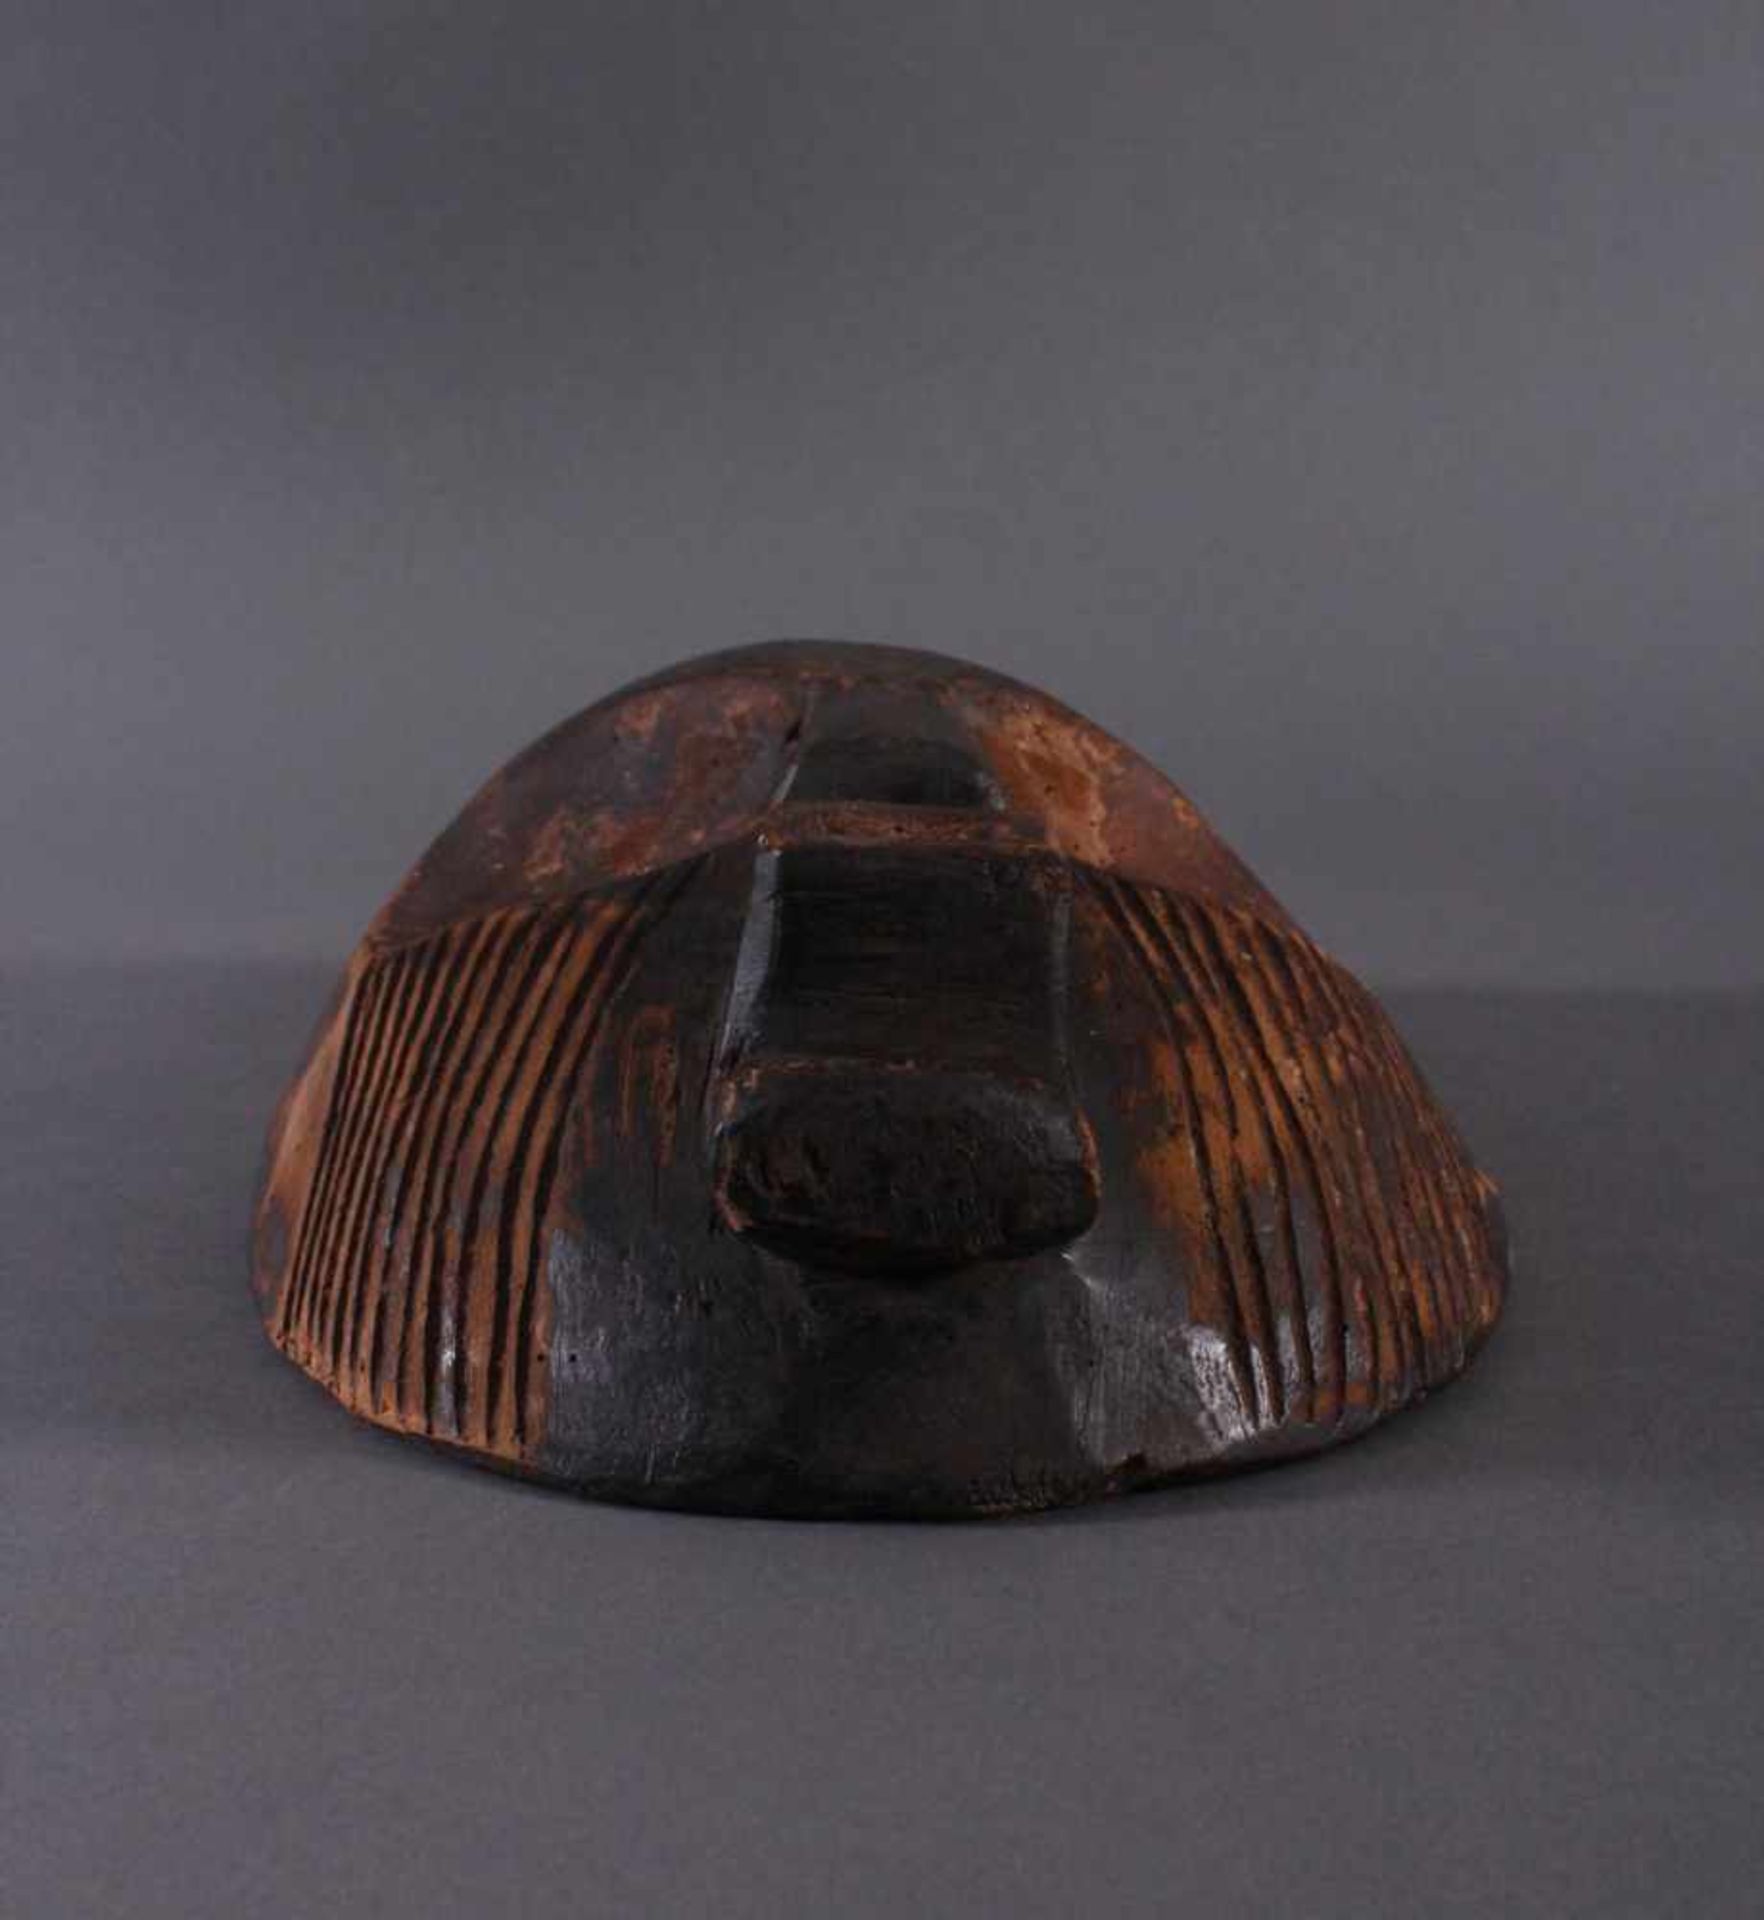 Antike Maske, Zaire/KongoHolz, geschnitzt, dunkel patiniert. Gesicht mit linearen Rillendekor, ca. - Bild 2 aus 6